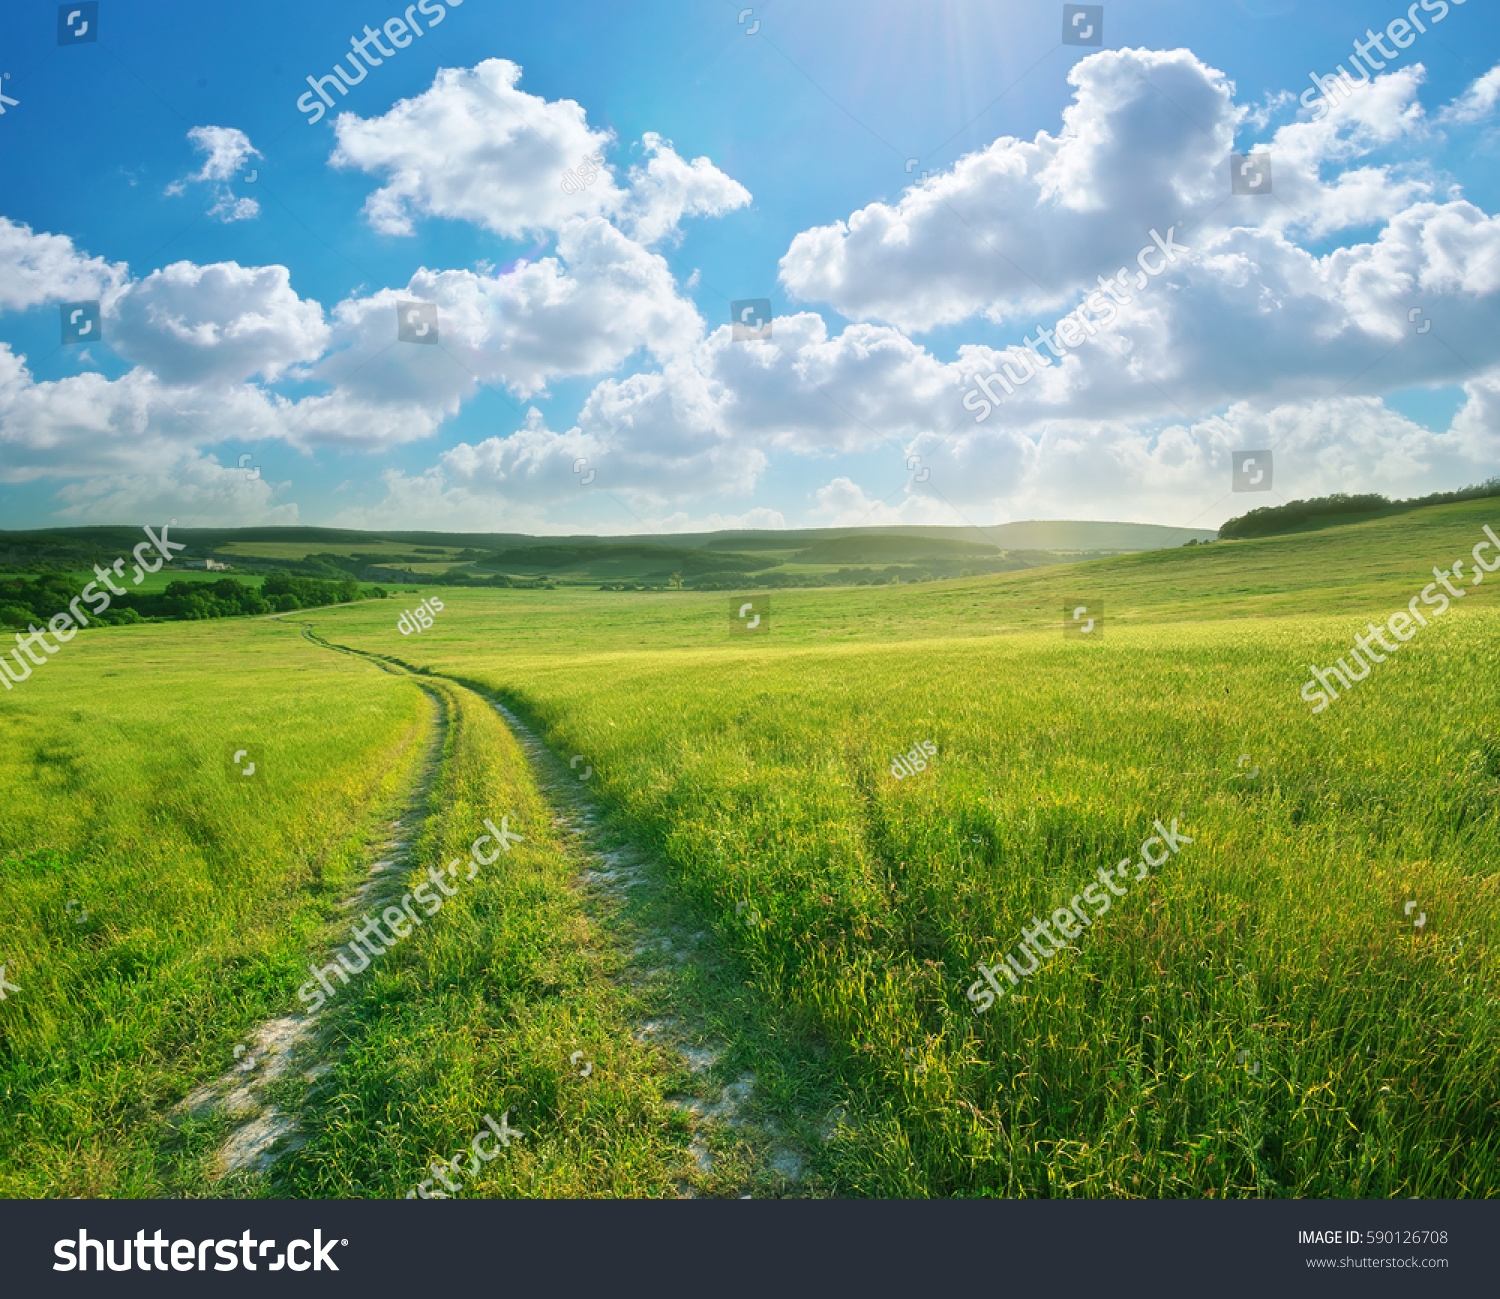 Road lane and deep blue sky. Nature design. #590126708